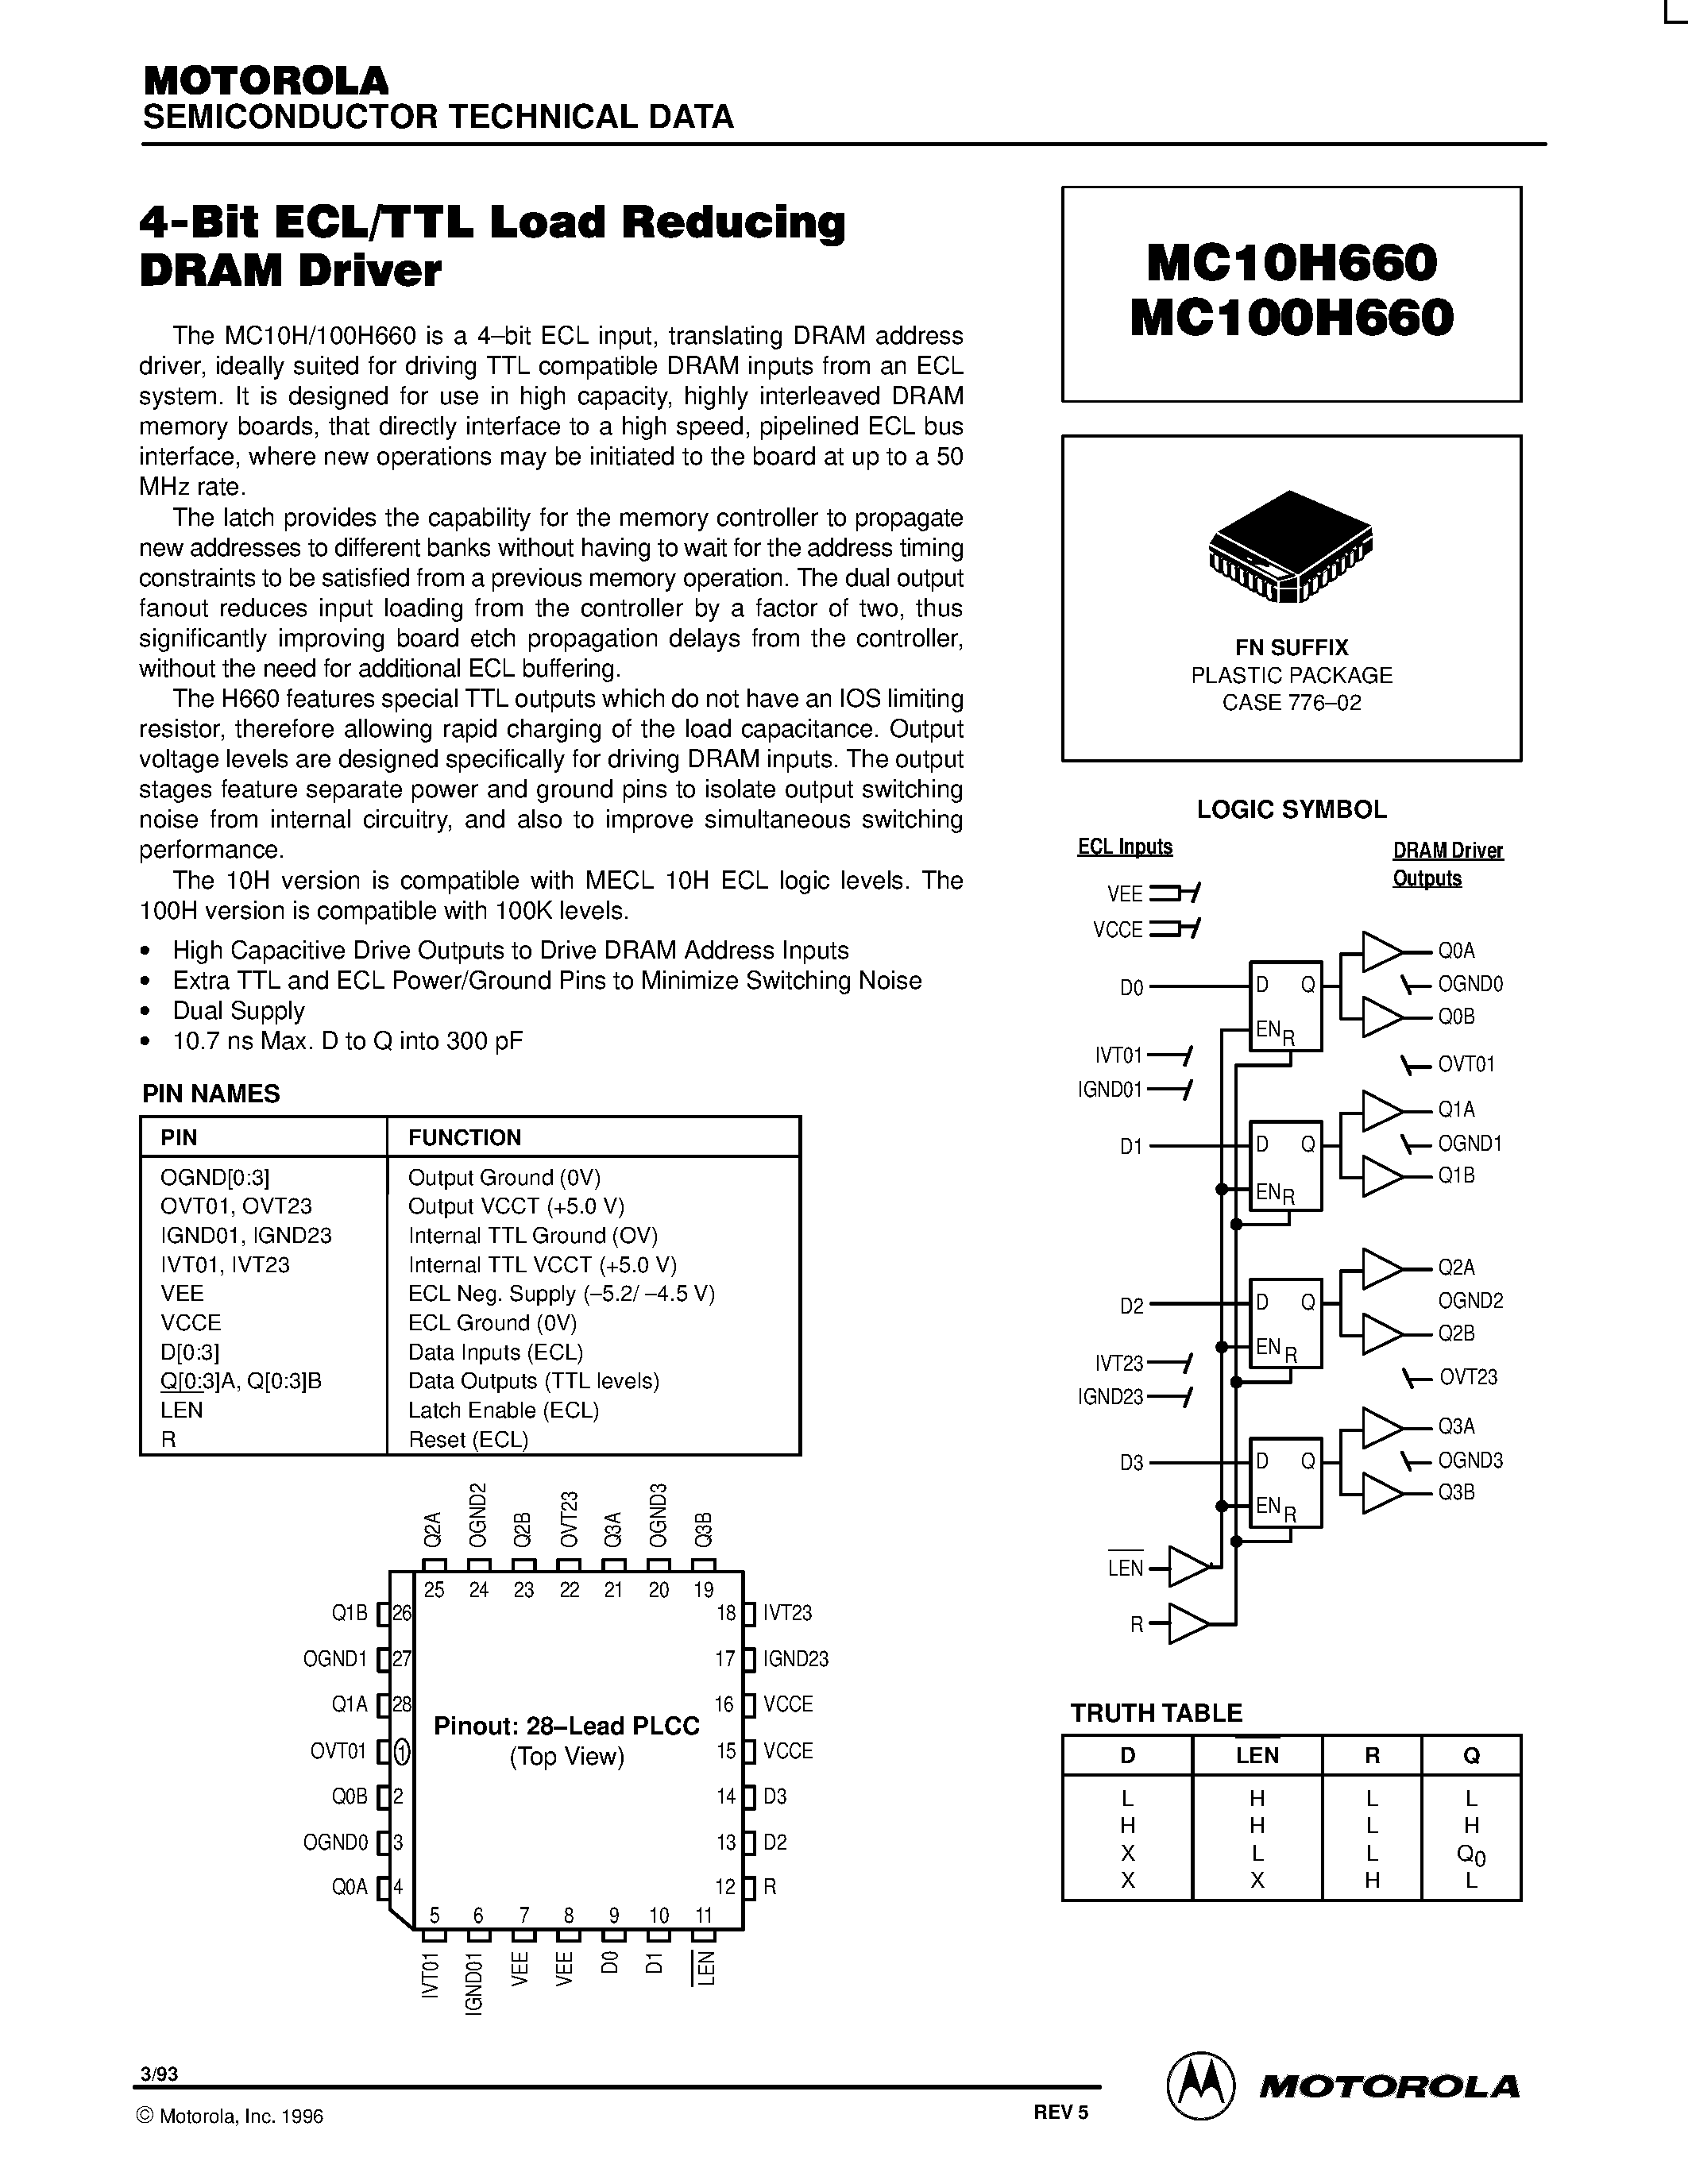 Datasheet MC10H660FN - 4-Bit ECL/TTL Load Reducing DRAM Driver page 1